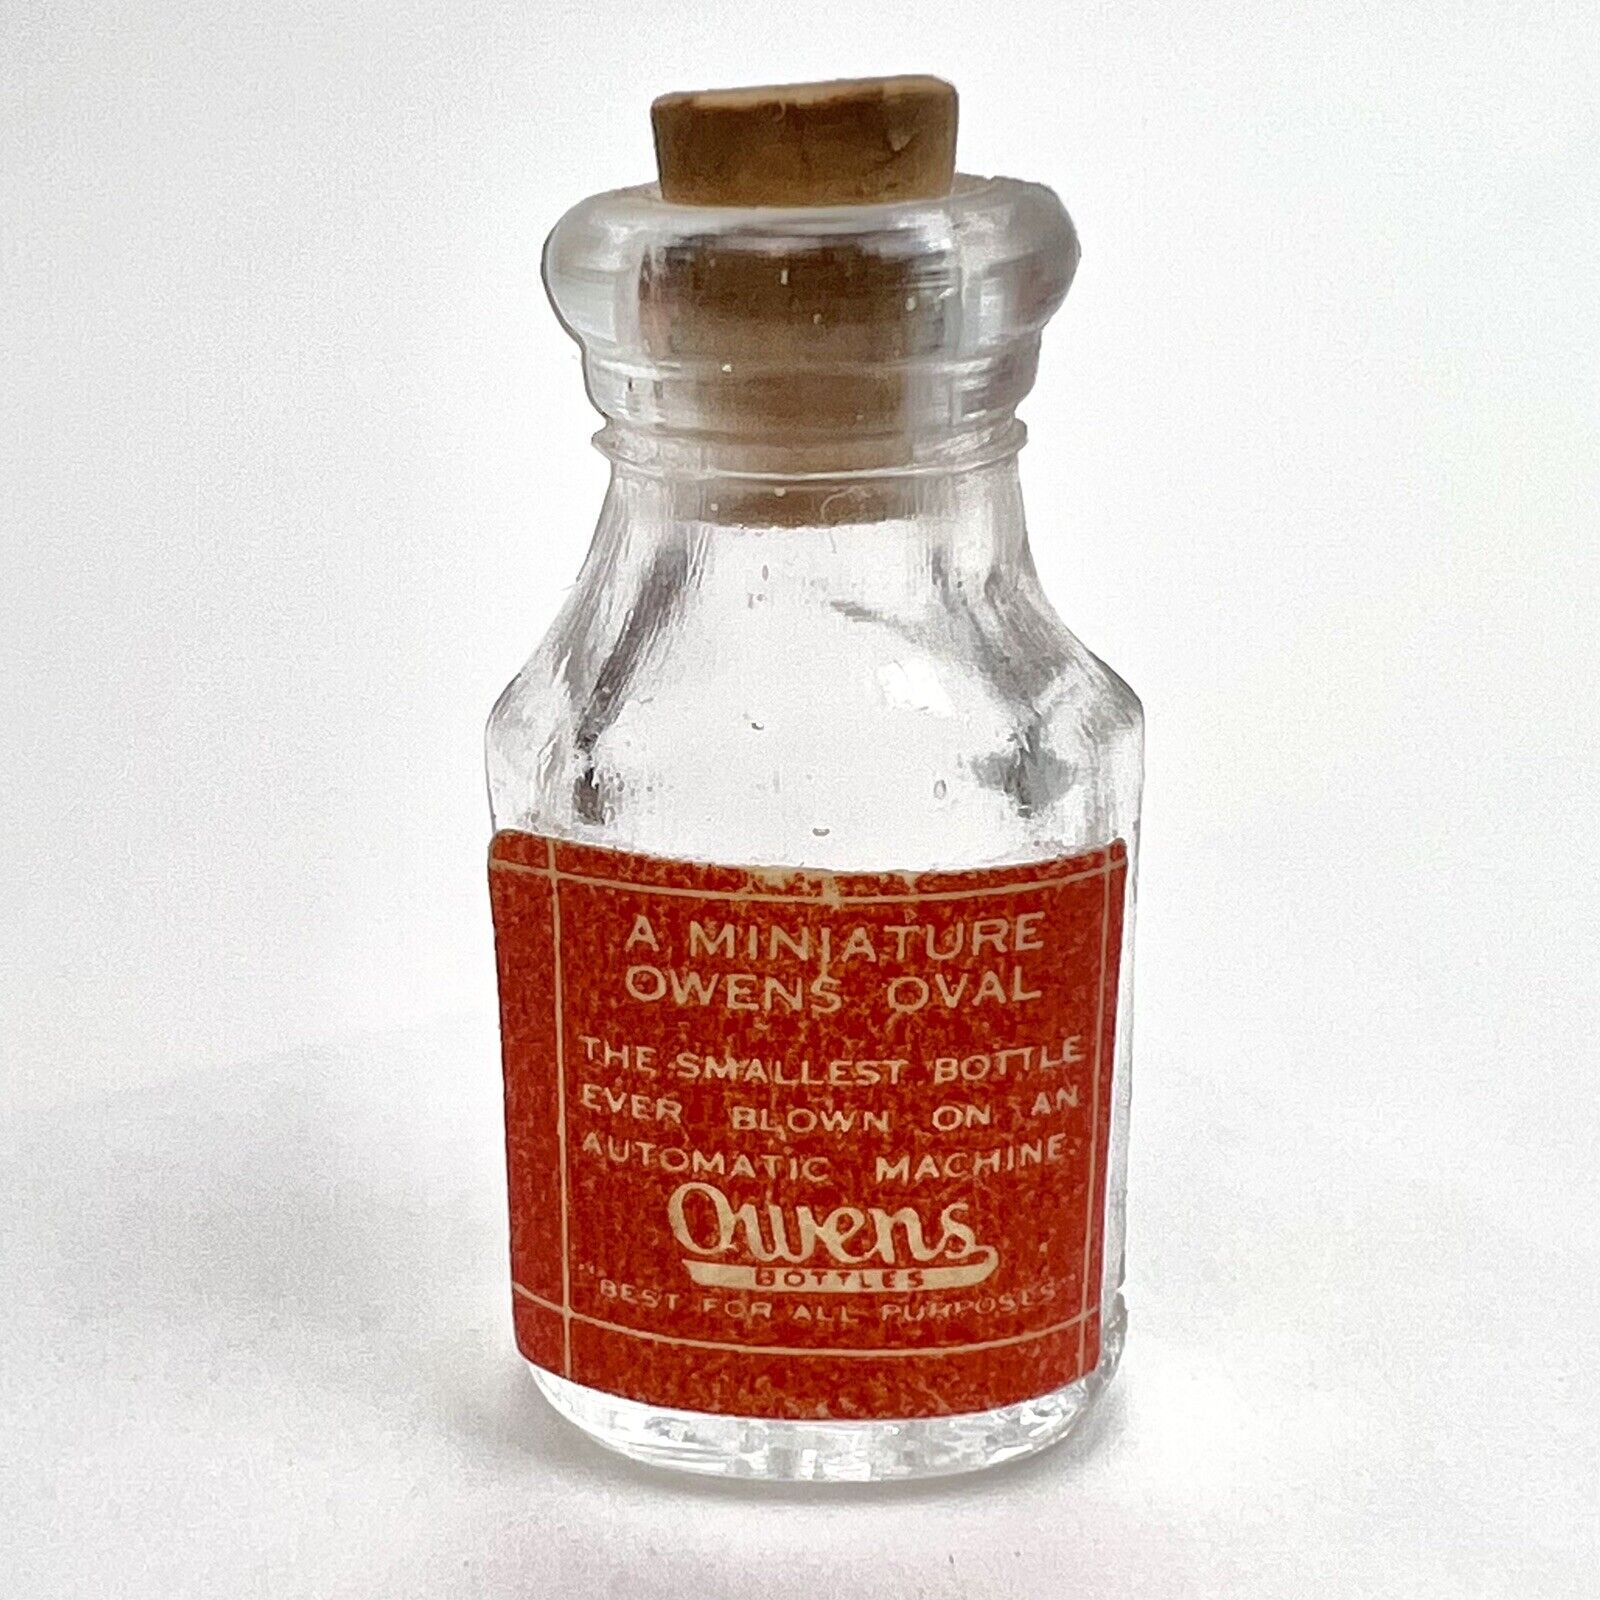 RARE 1912 Miniature Owens Oval Bottle The Smallest Ever Blown Automatic Machine